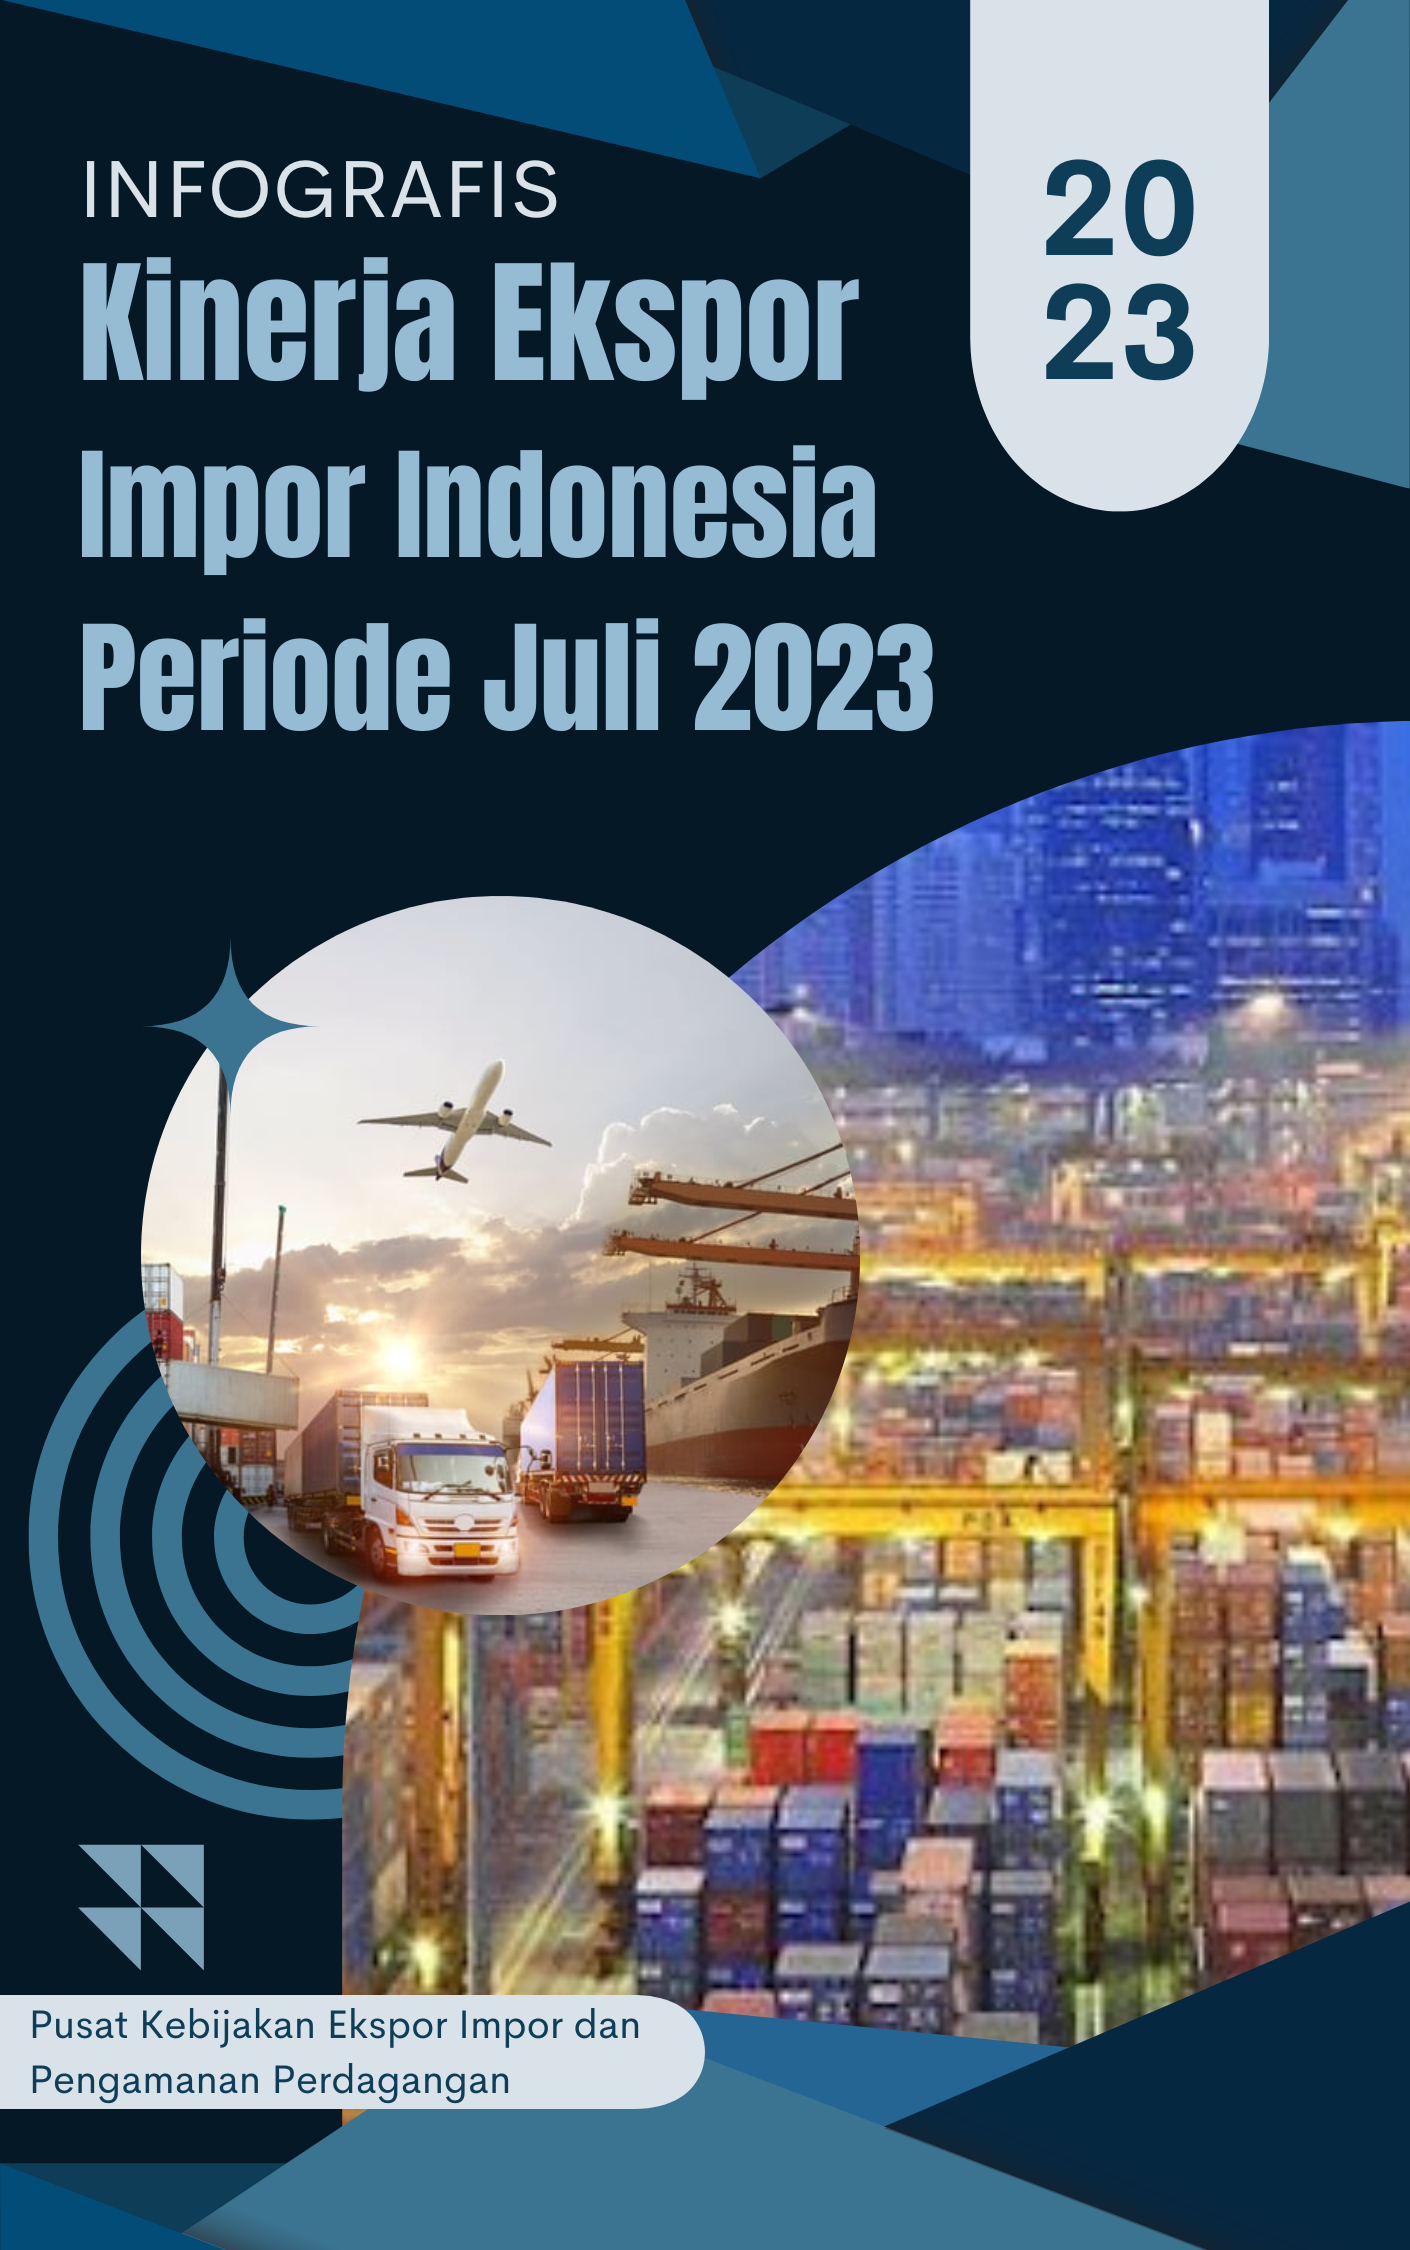 Kinerja Ekspor Impor Indonesia Periode Juli Tahun 2023